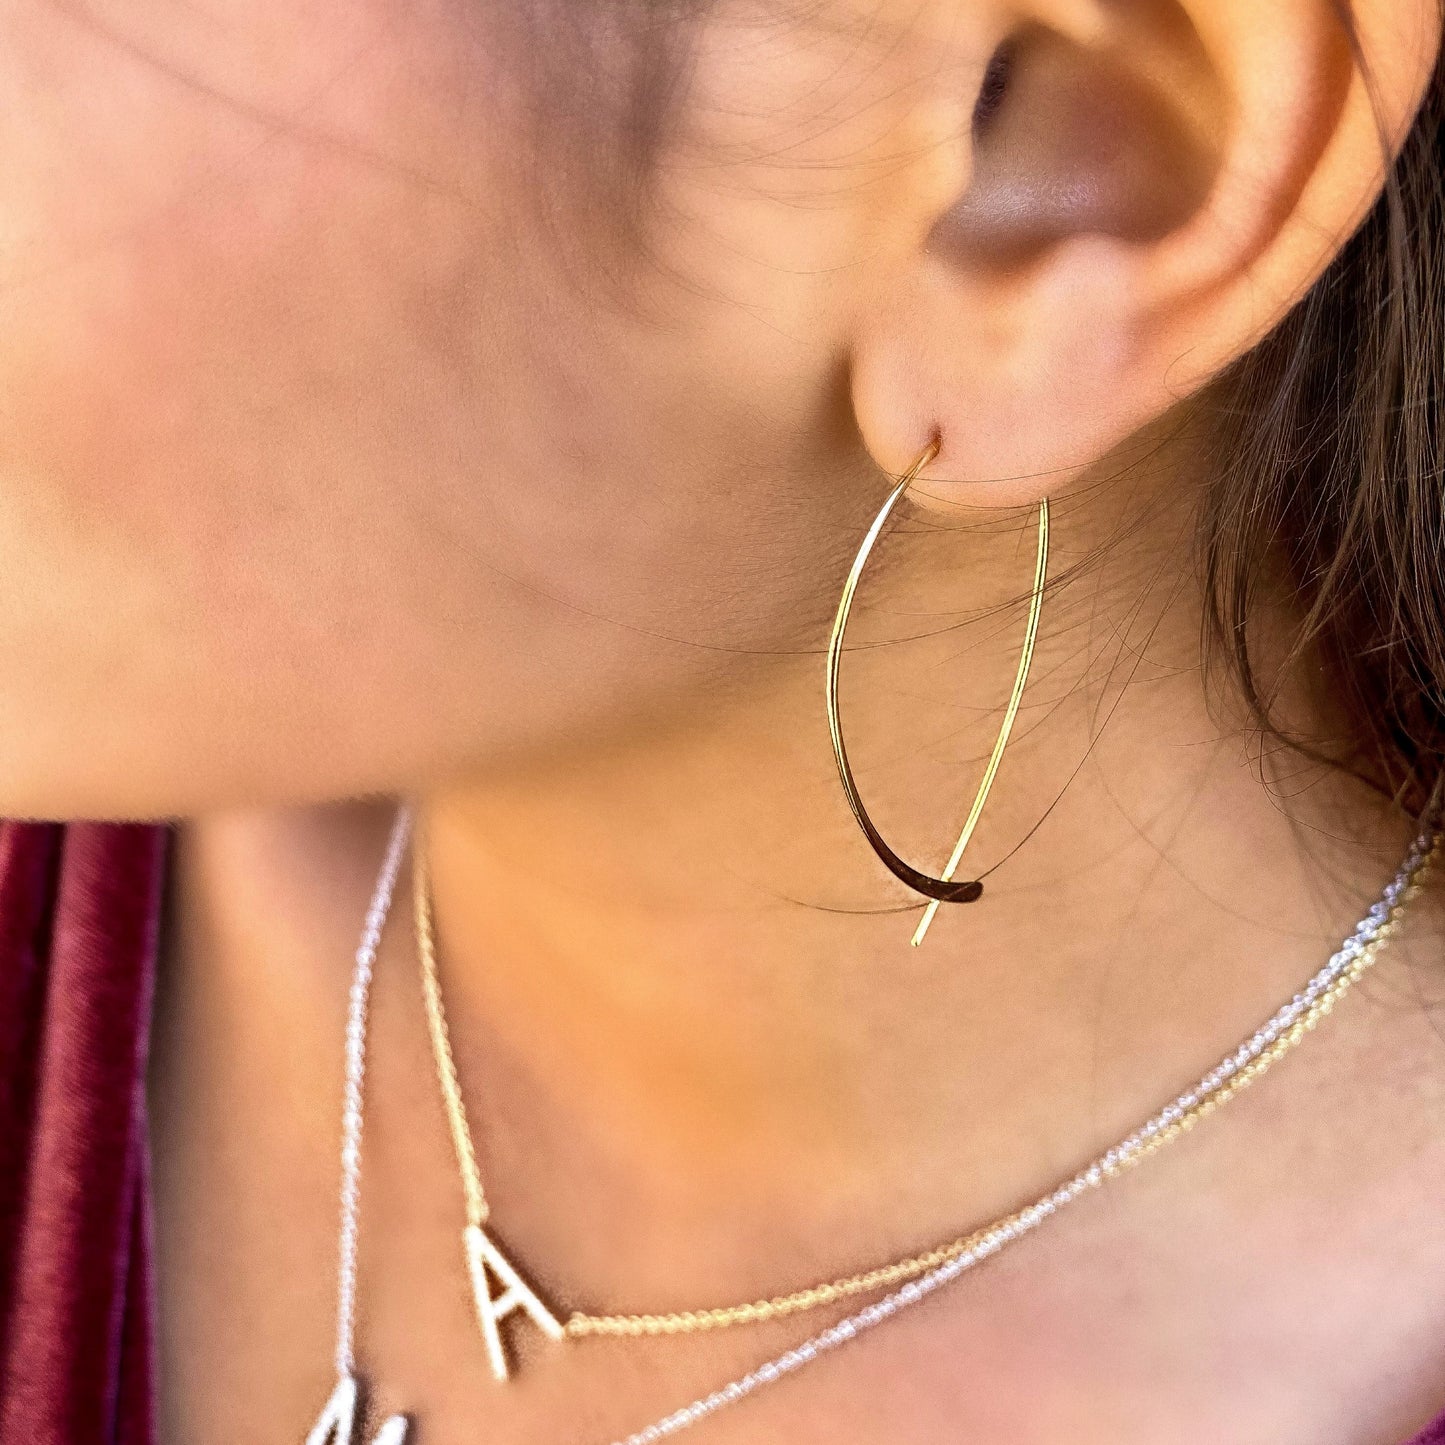 Wearing The Thin gold threader hoop earrings - Alexandra Marks Jewelry